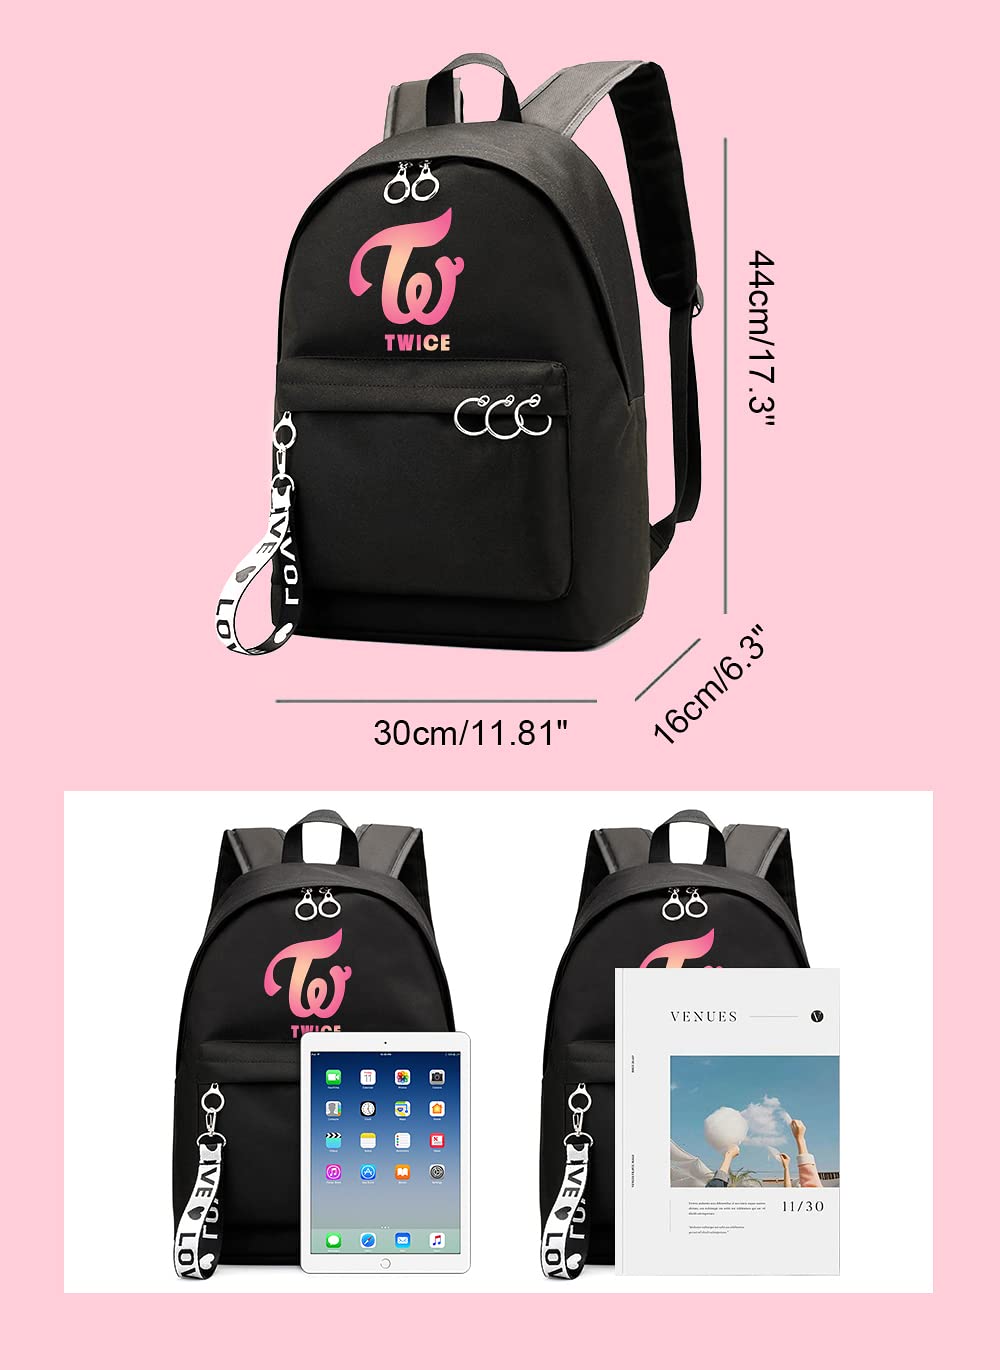 KAEFRA Casual Kpop Neｗ Twice Jeans Merch Backpack Bags Merchandise (KH003)